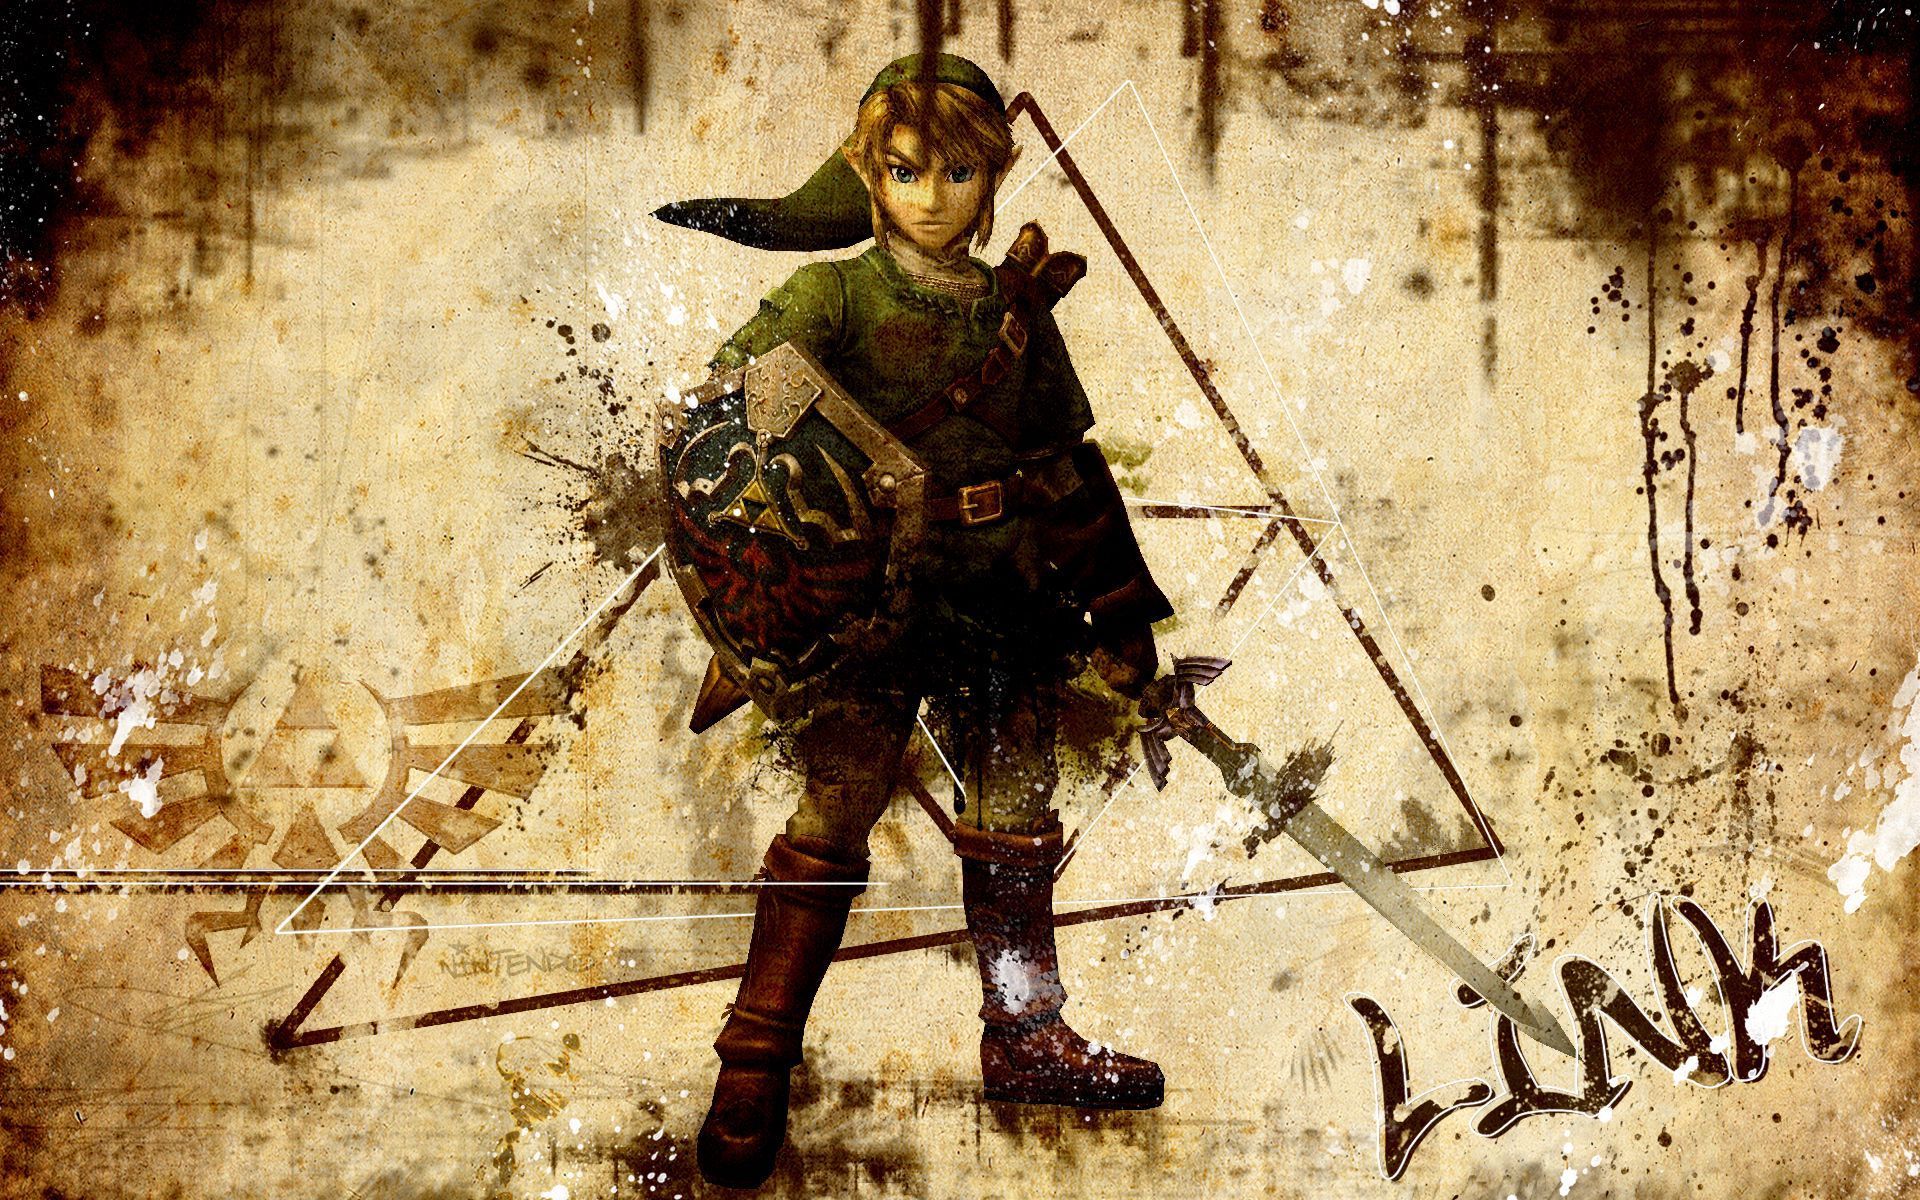 Link - The Legend of Zelda Wallpaper 2833139 - Fanpop